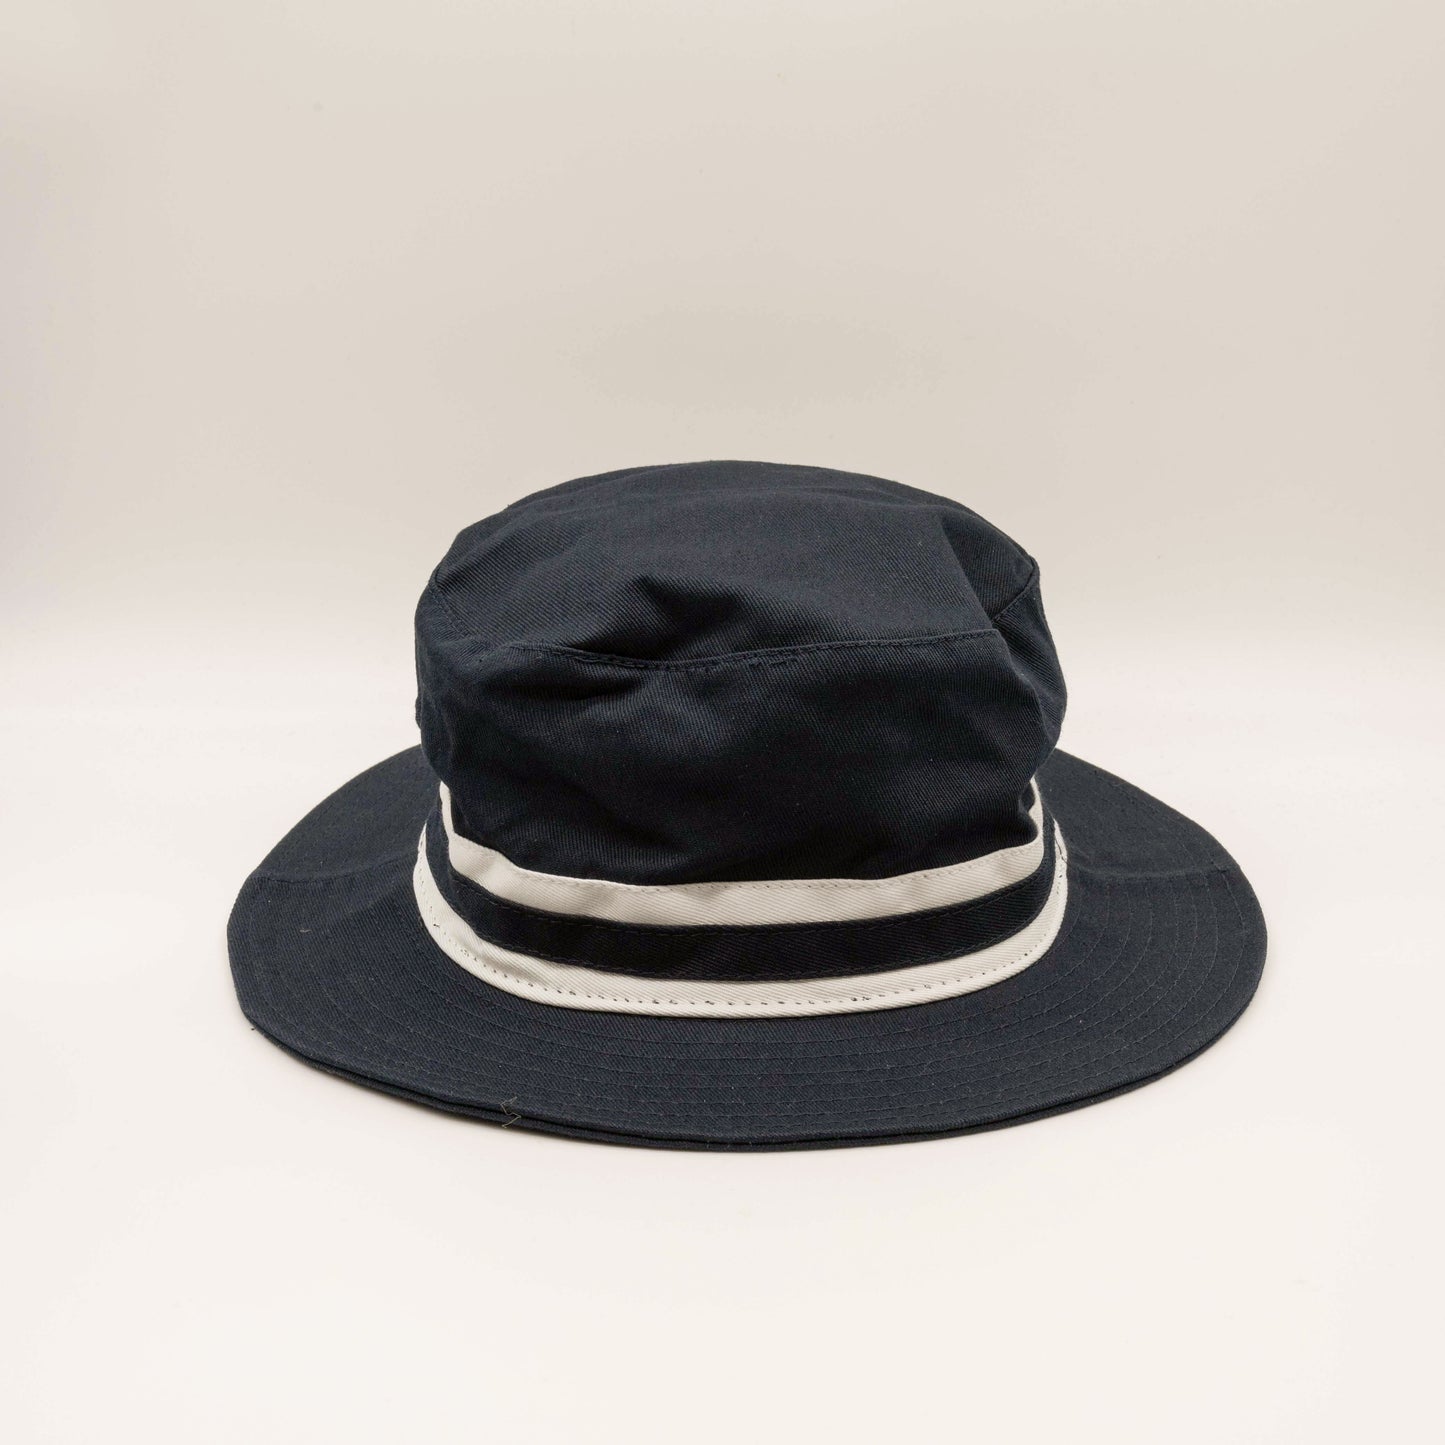 Royal Melbourne Visitors Logo Cotton Bucket Hat - Navy